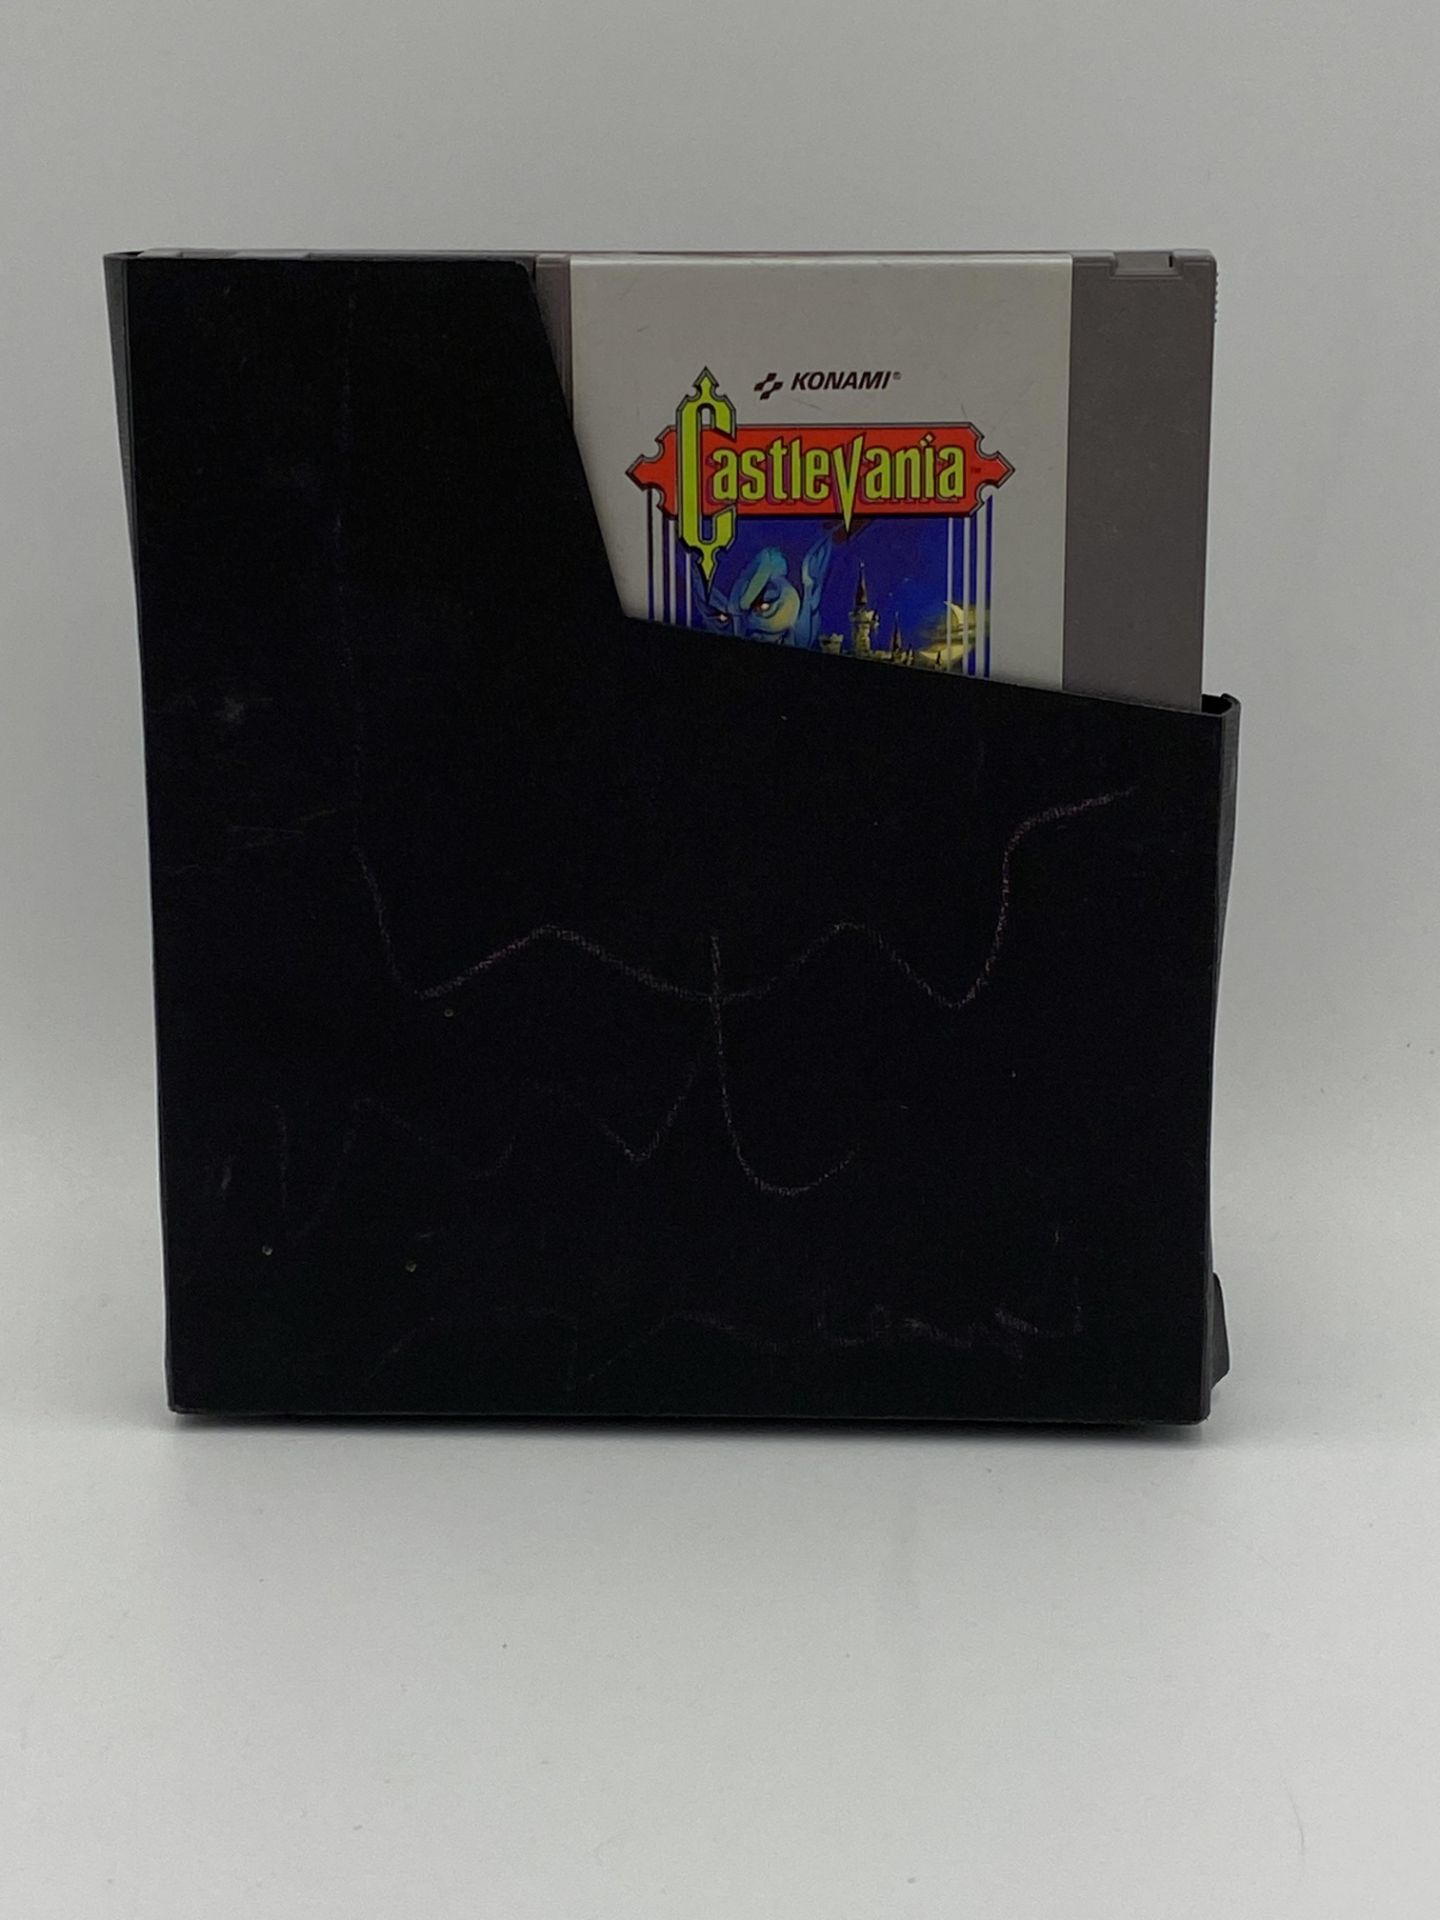 Konami Castlevania NES cartridge - Image 2 of 2